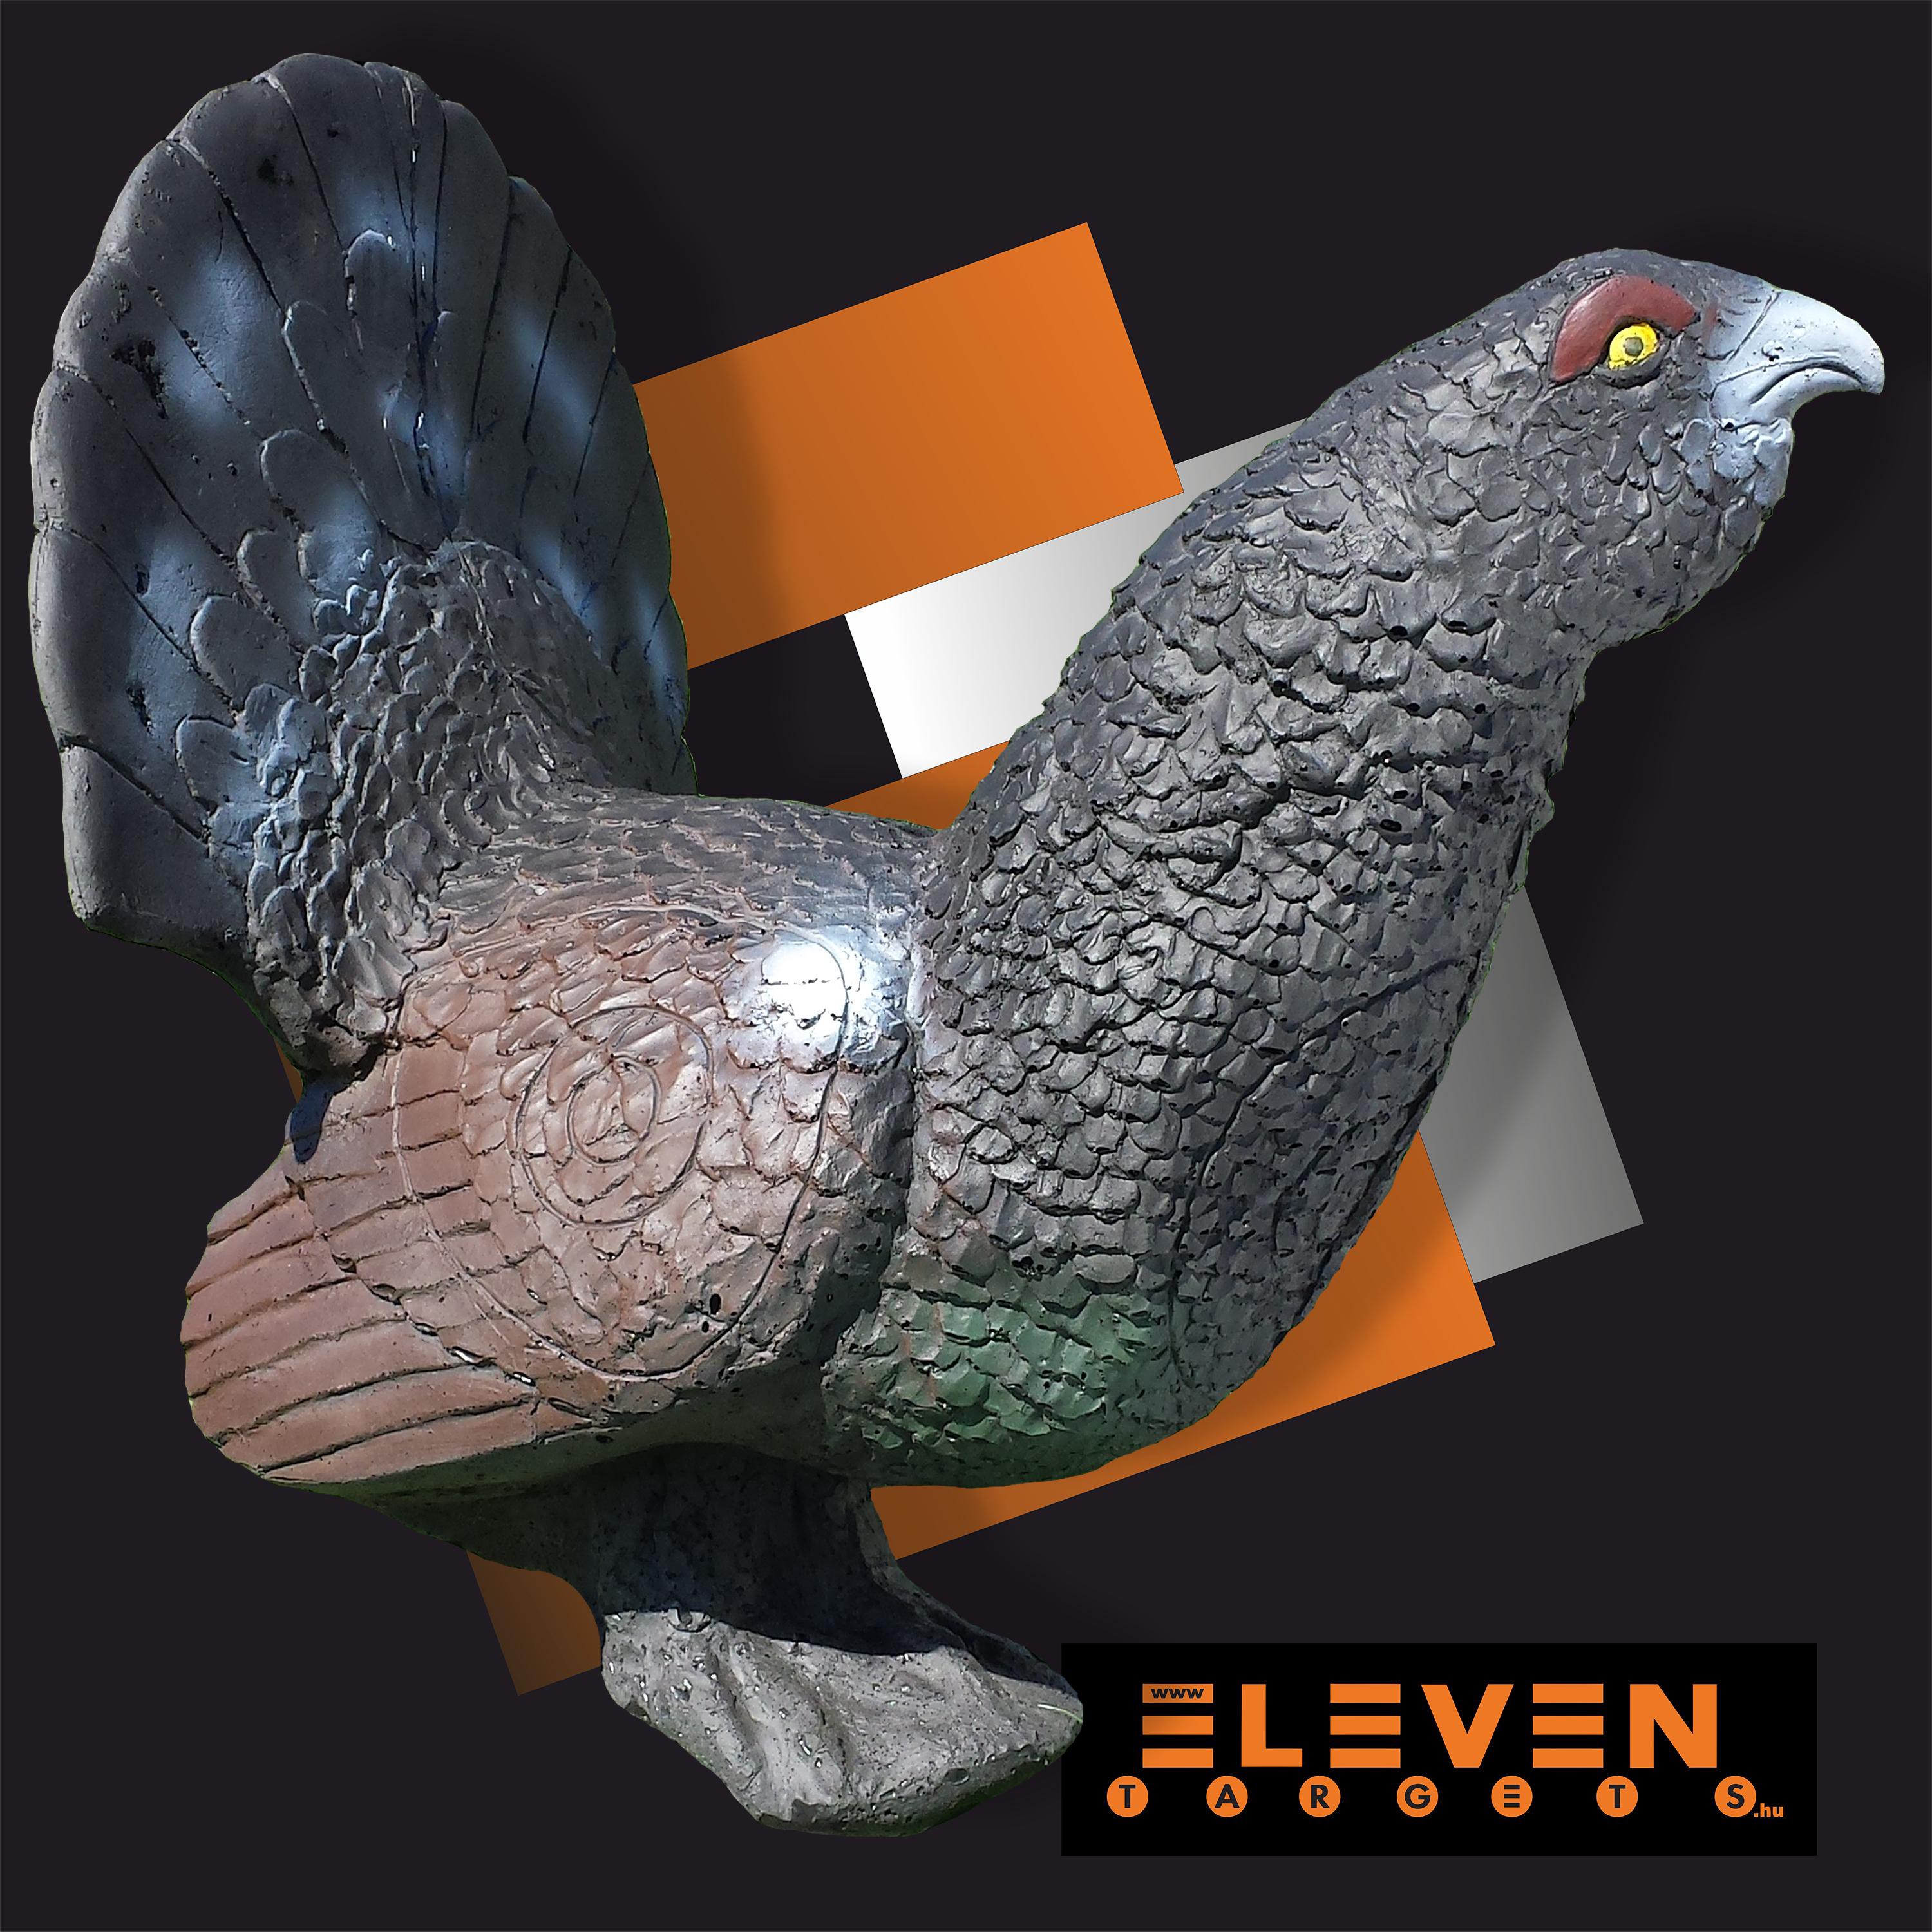  Eleven Blackcock E48 3D Target